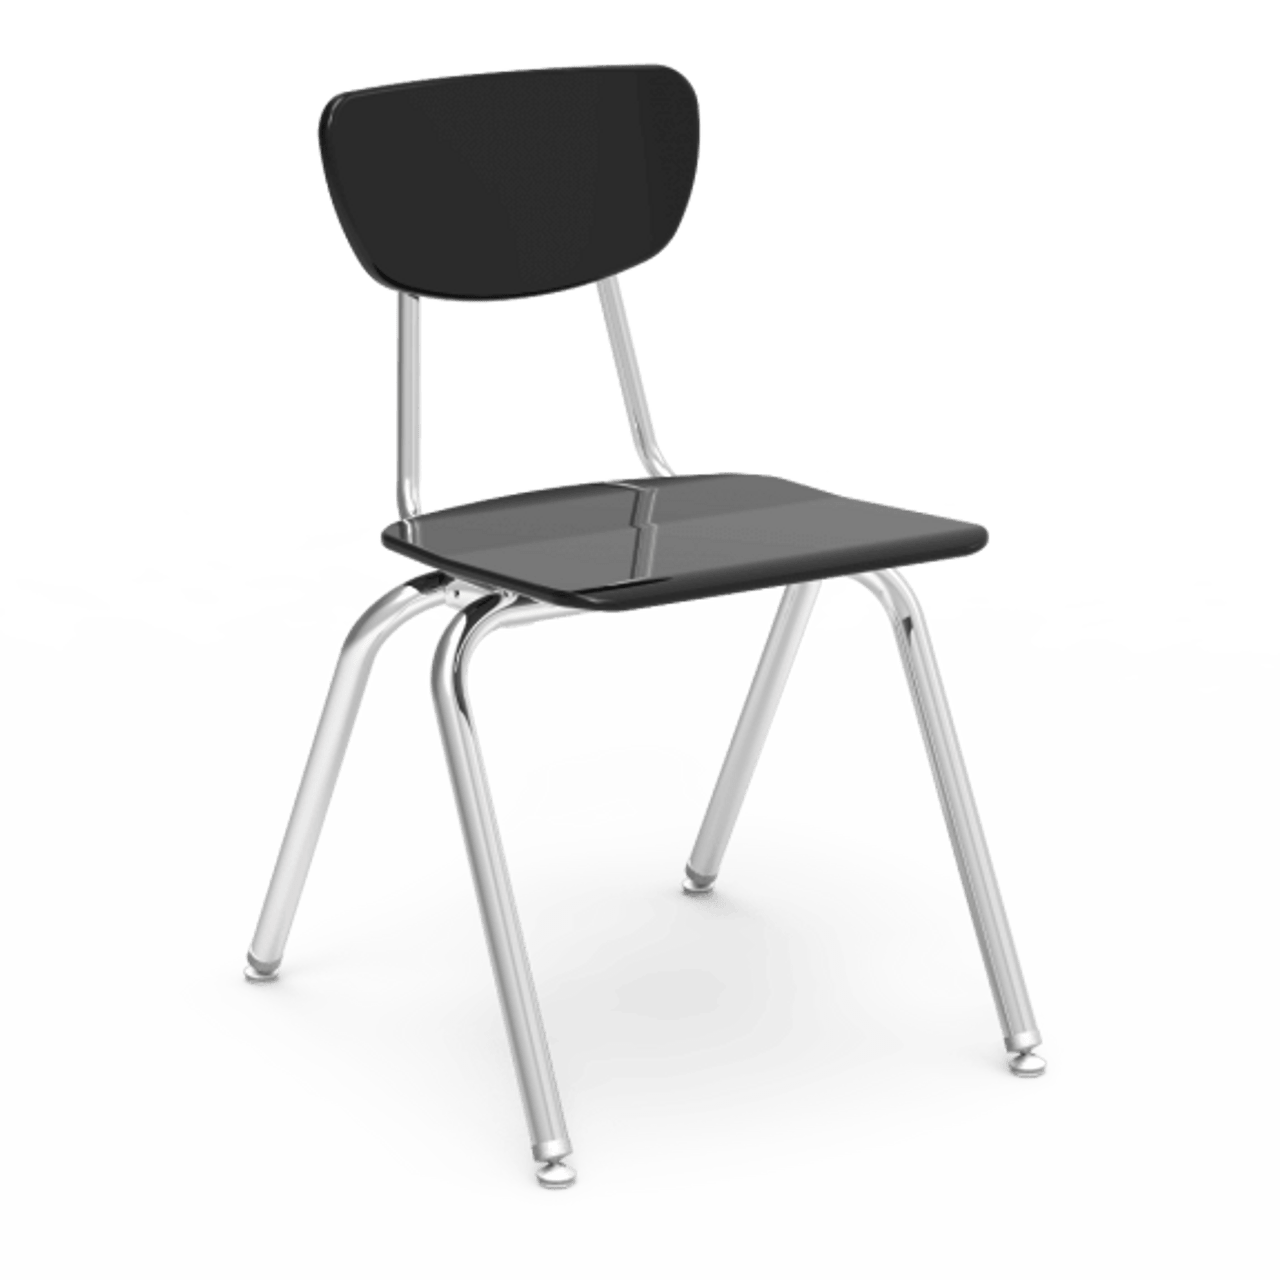 Virco School Furniture, Classroom Chairs, Student Desks